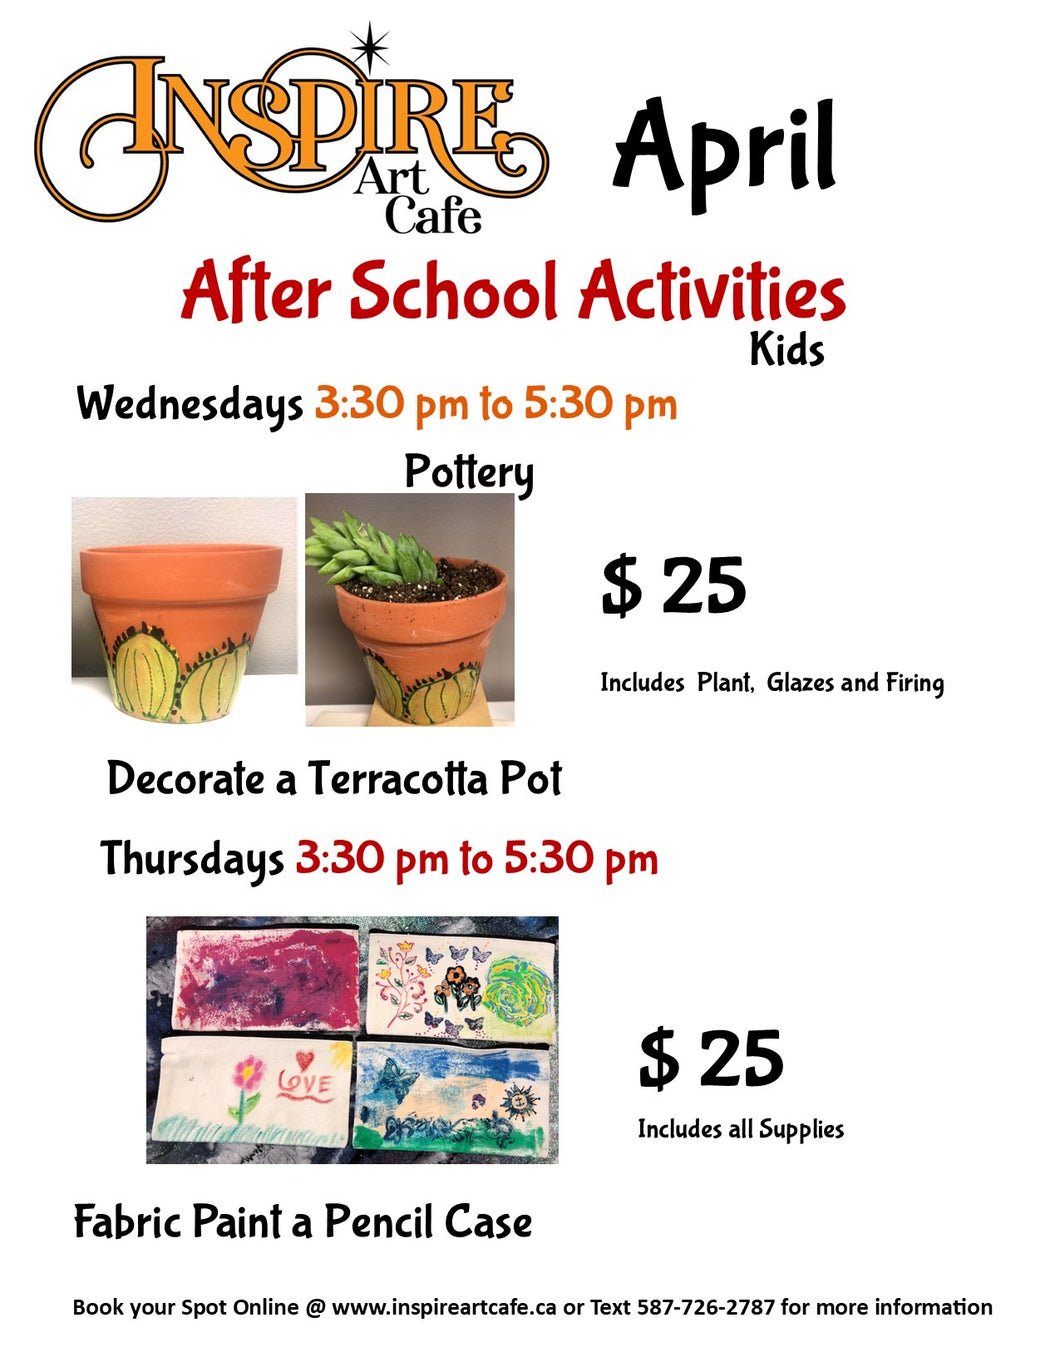 After School Activity Decorate a Terracotta Pot April 24